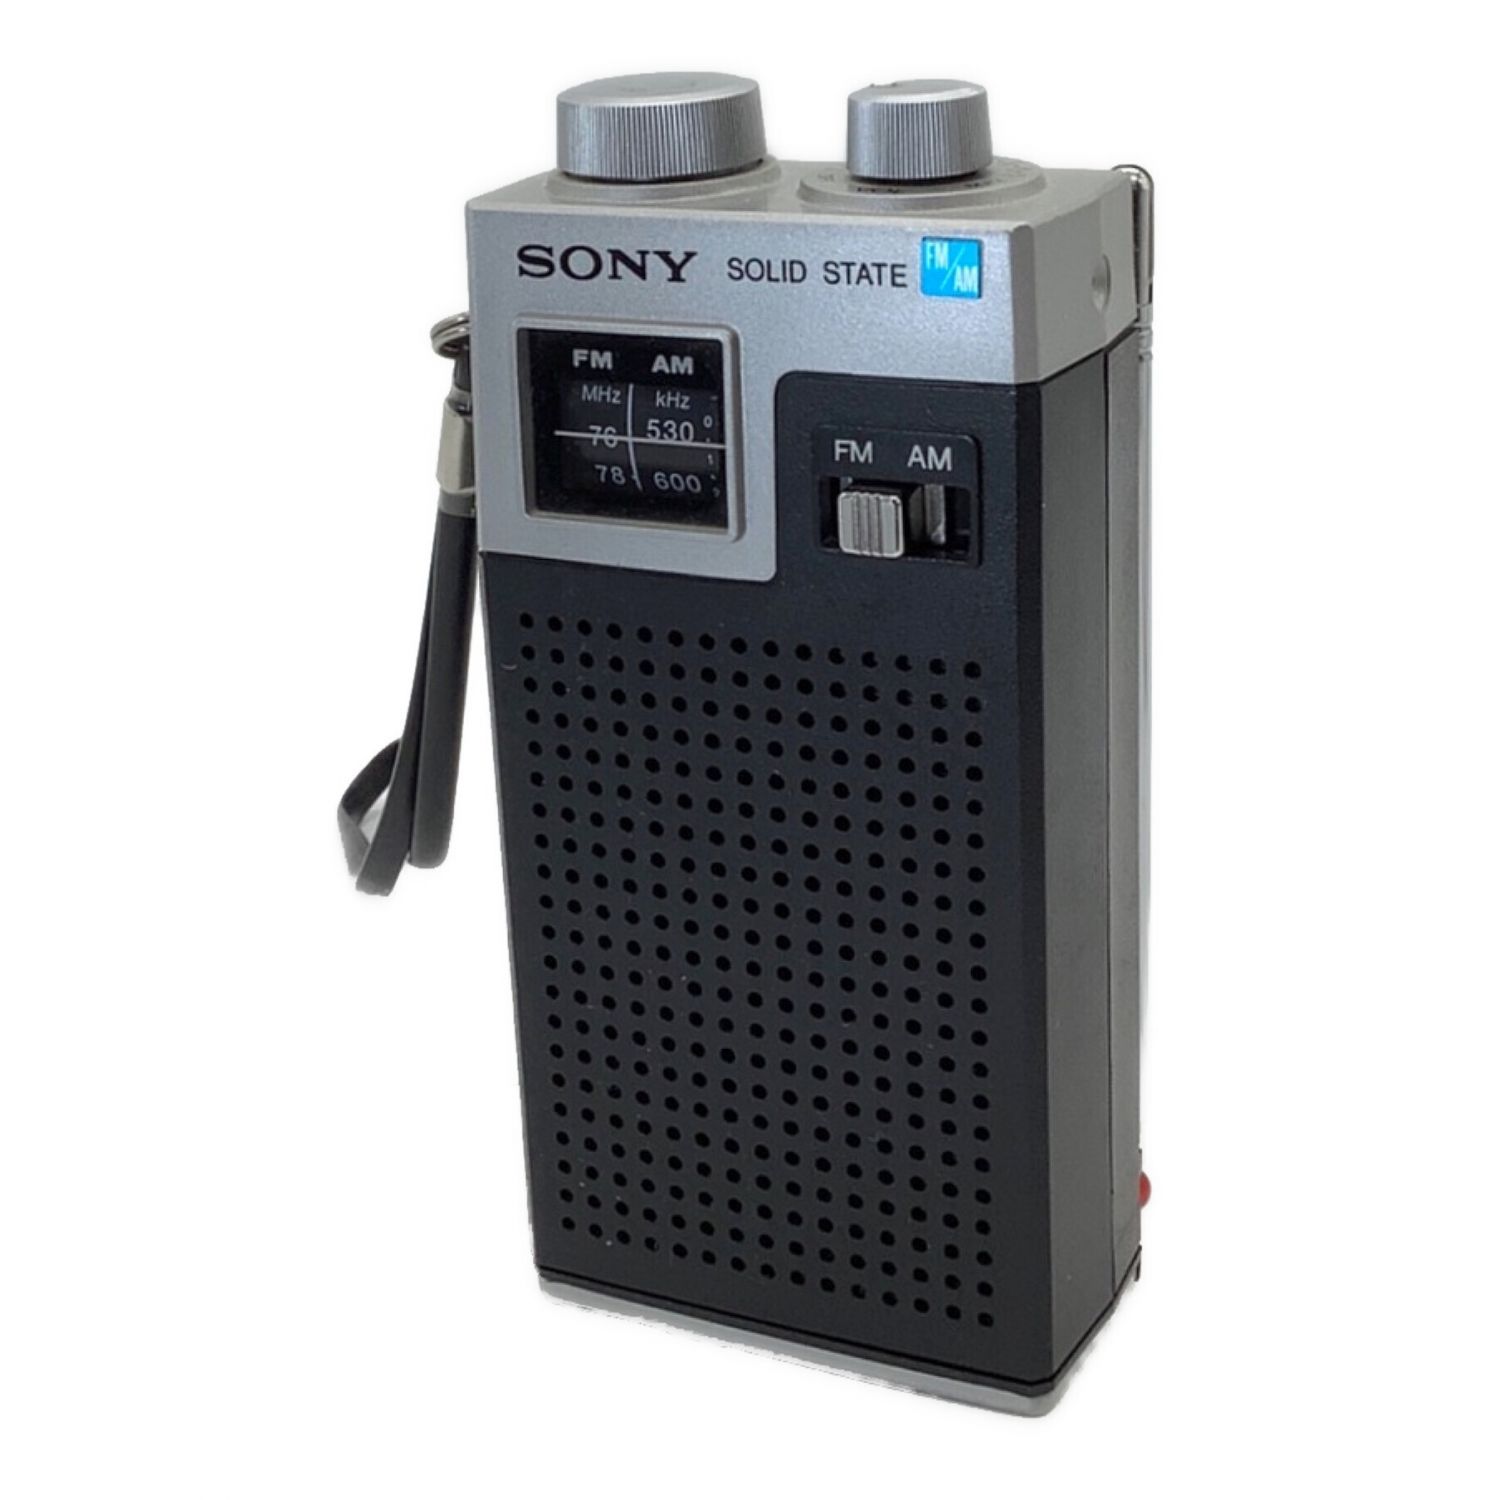 SONY (ソニー) トランジスタラジオ ジャンク扱い TFM-4500 